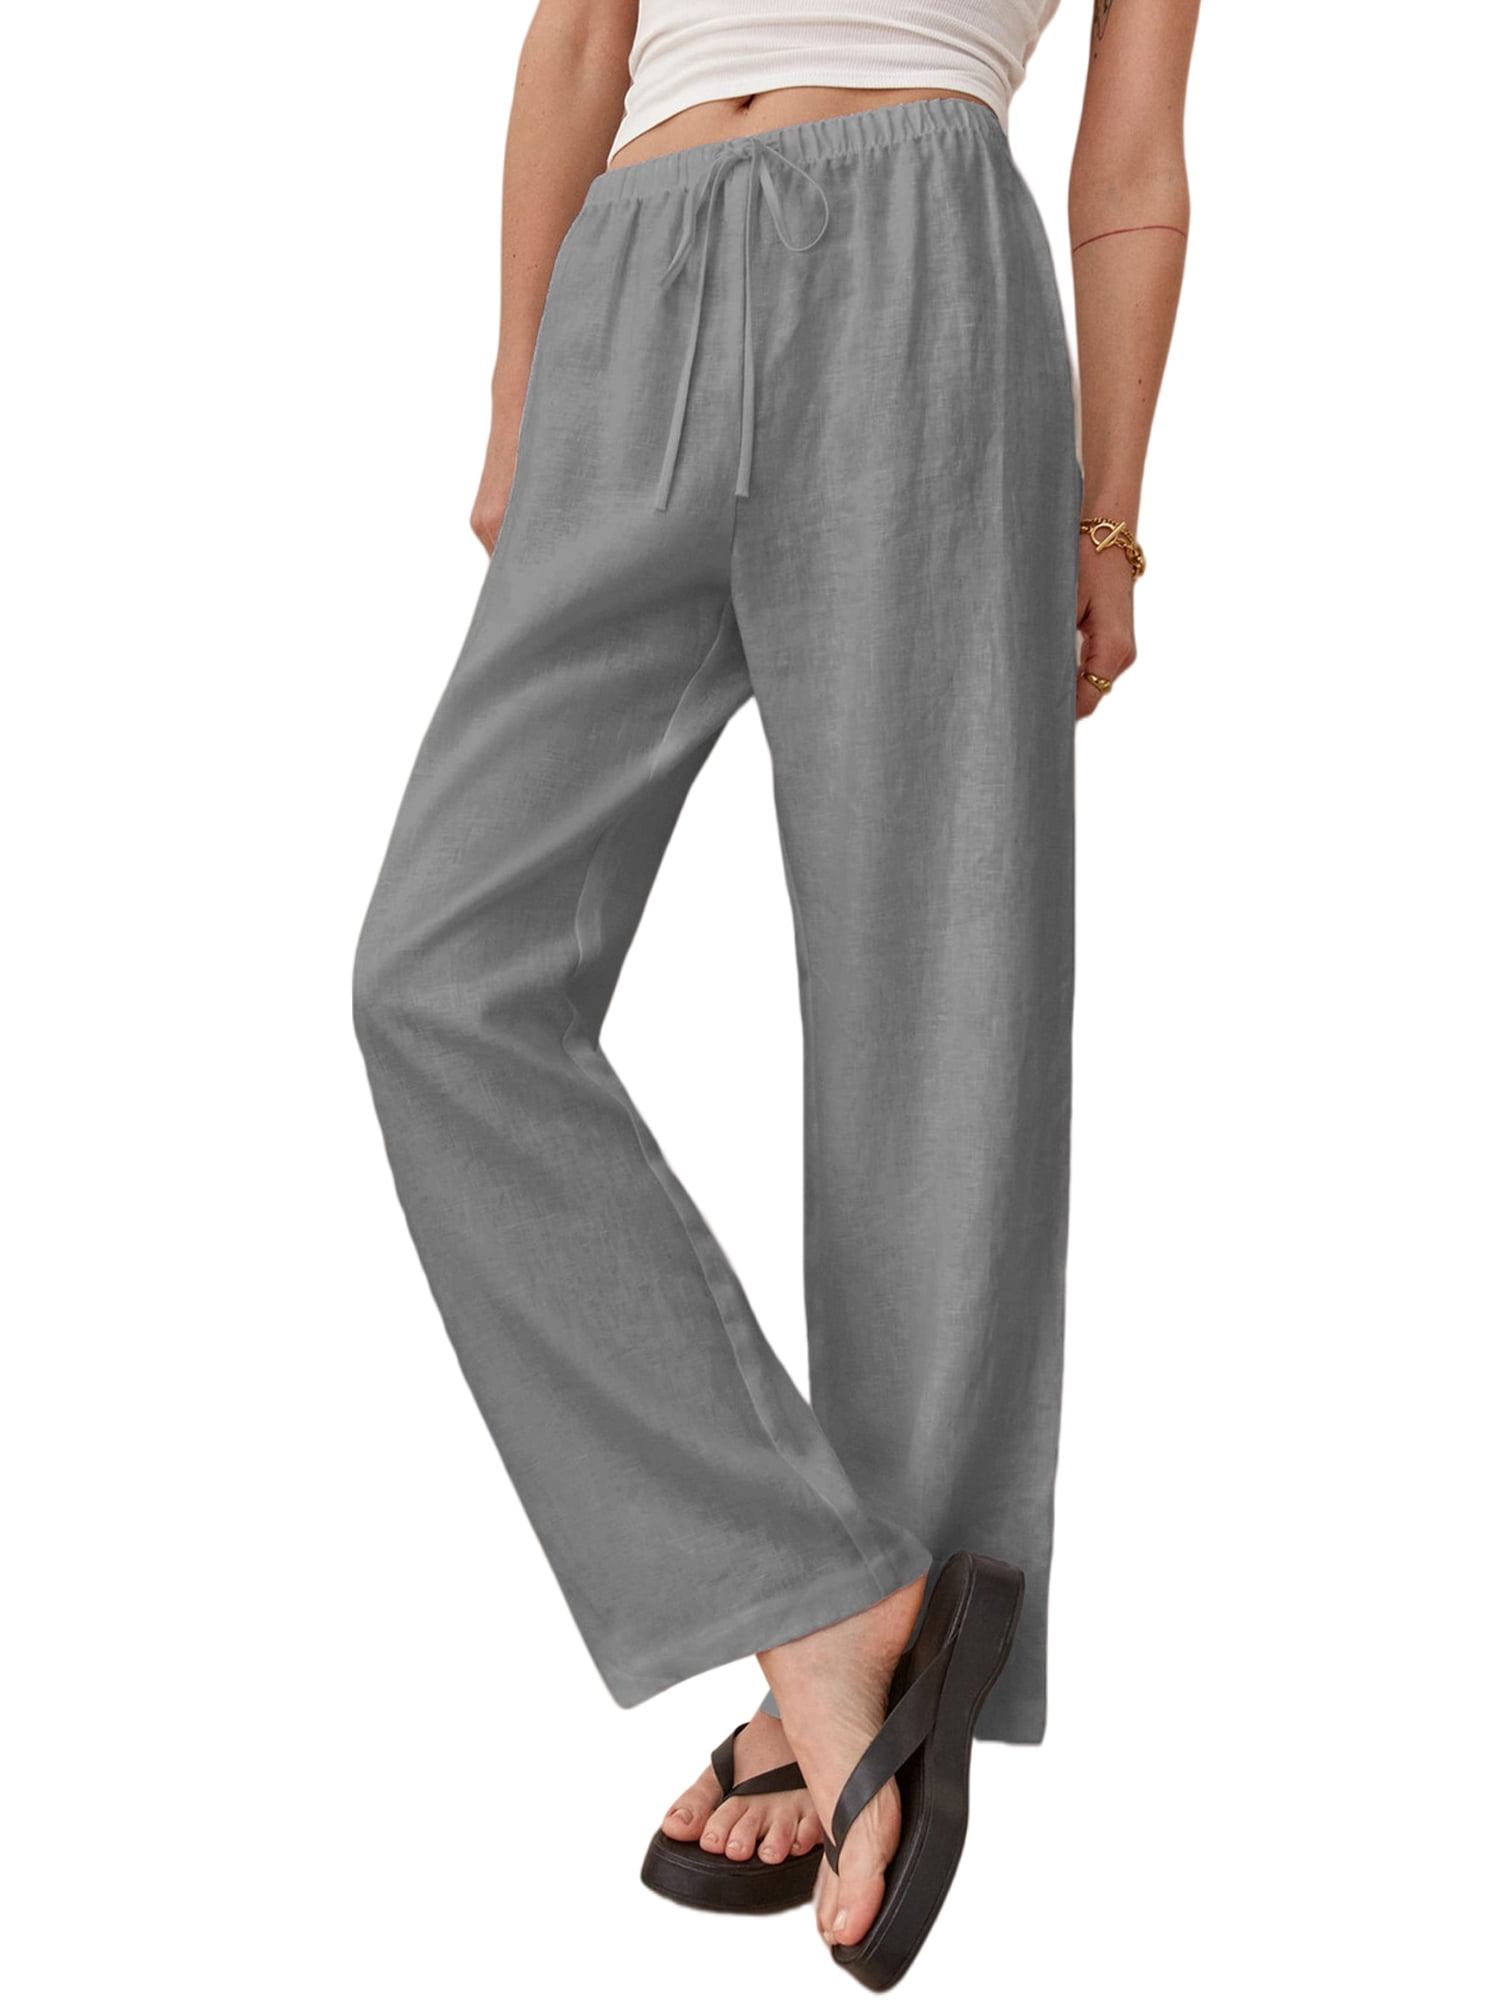 Womens Baggy Cotton Linen Pants Drawstring Loose Fit Plus Size Straight Leg Comfy Lounge Pants Lightweight Yoga Beach Pants 